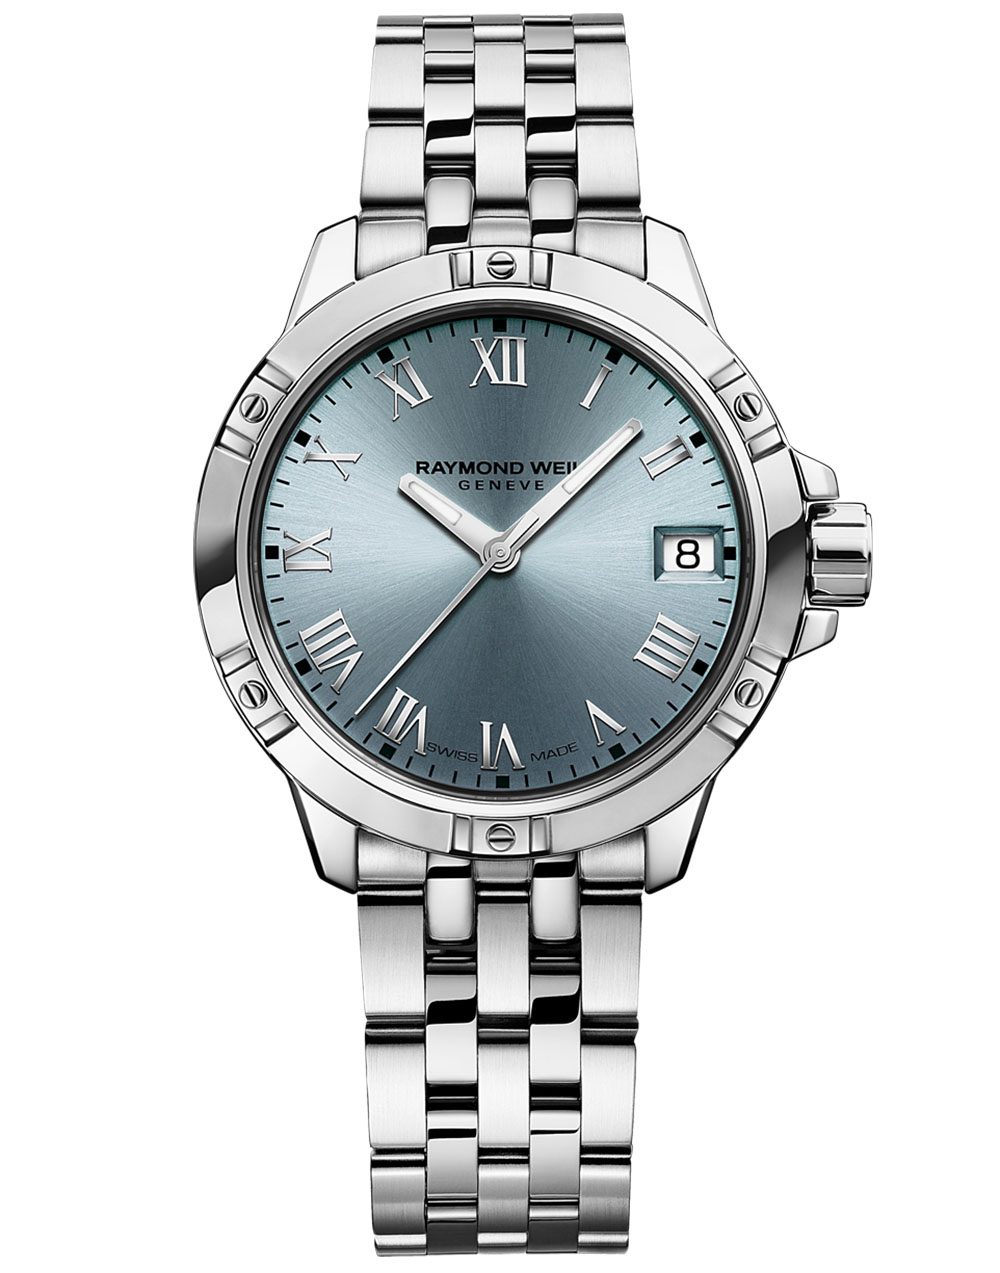 Raymond WeilTango Classic Ladies Quartz Blue Dial Steel Date Watch, 30mm (5960-ST-00500)
Stainless Steel Bracelet, Blue Dial, Indexes, Stainless Steel Case